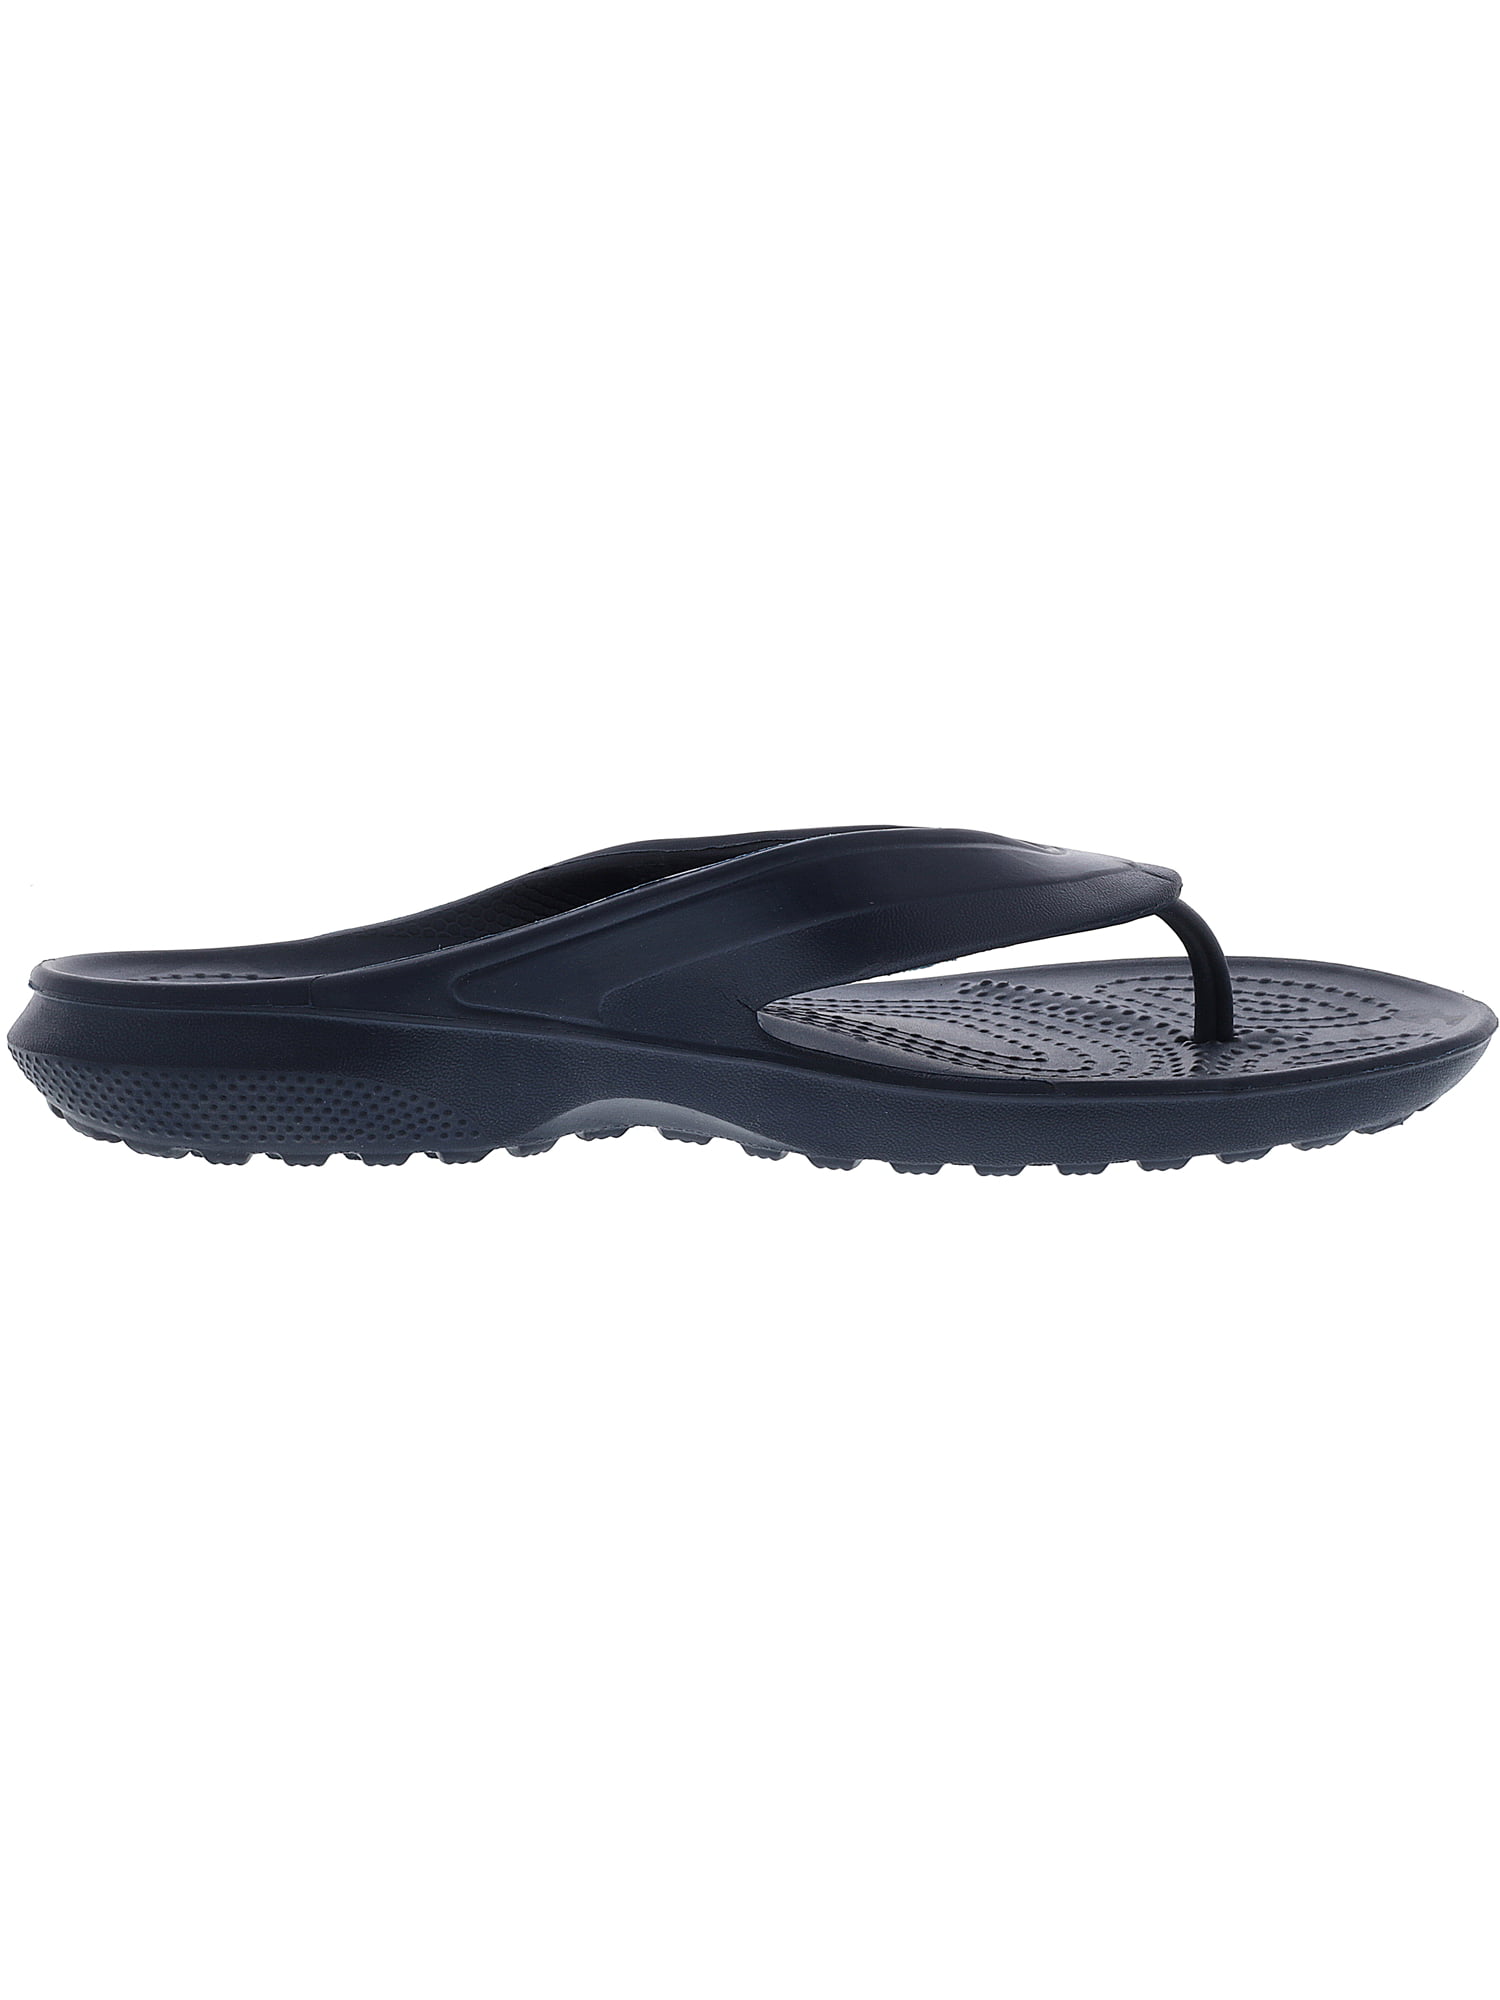 Crocs Kids Classic Flip Flop Ltd Navy Sandal - 6M | Walmart Canada